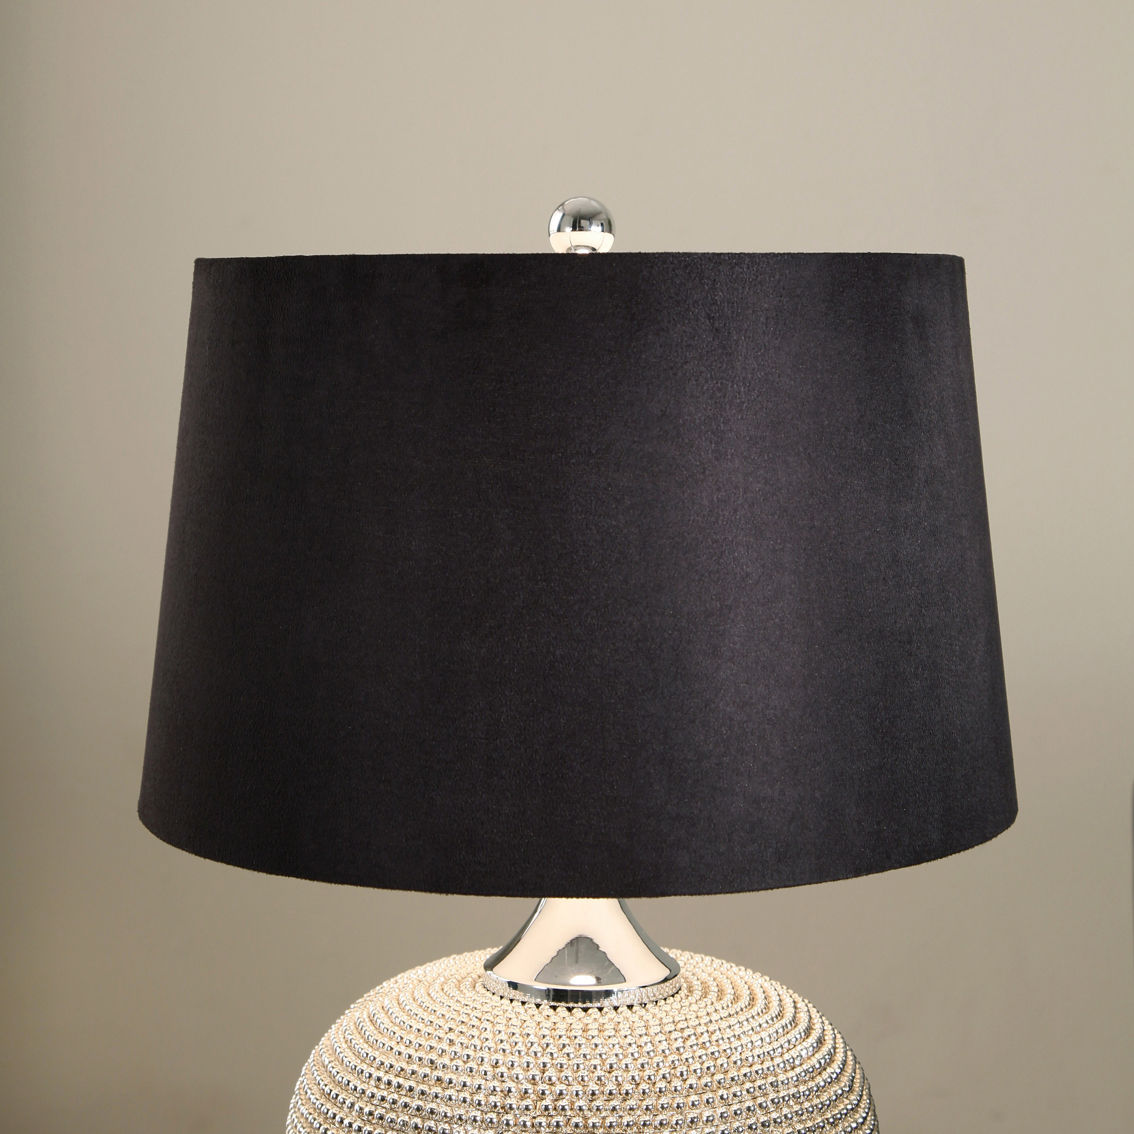 Abbyson Celine Beaded Table Lamp - Image 3 of 4